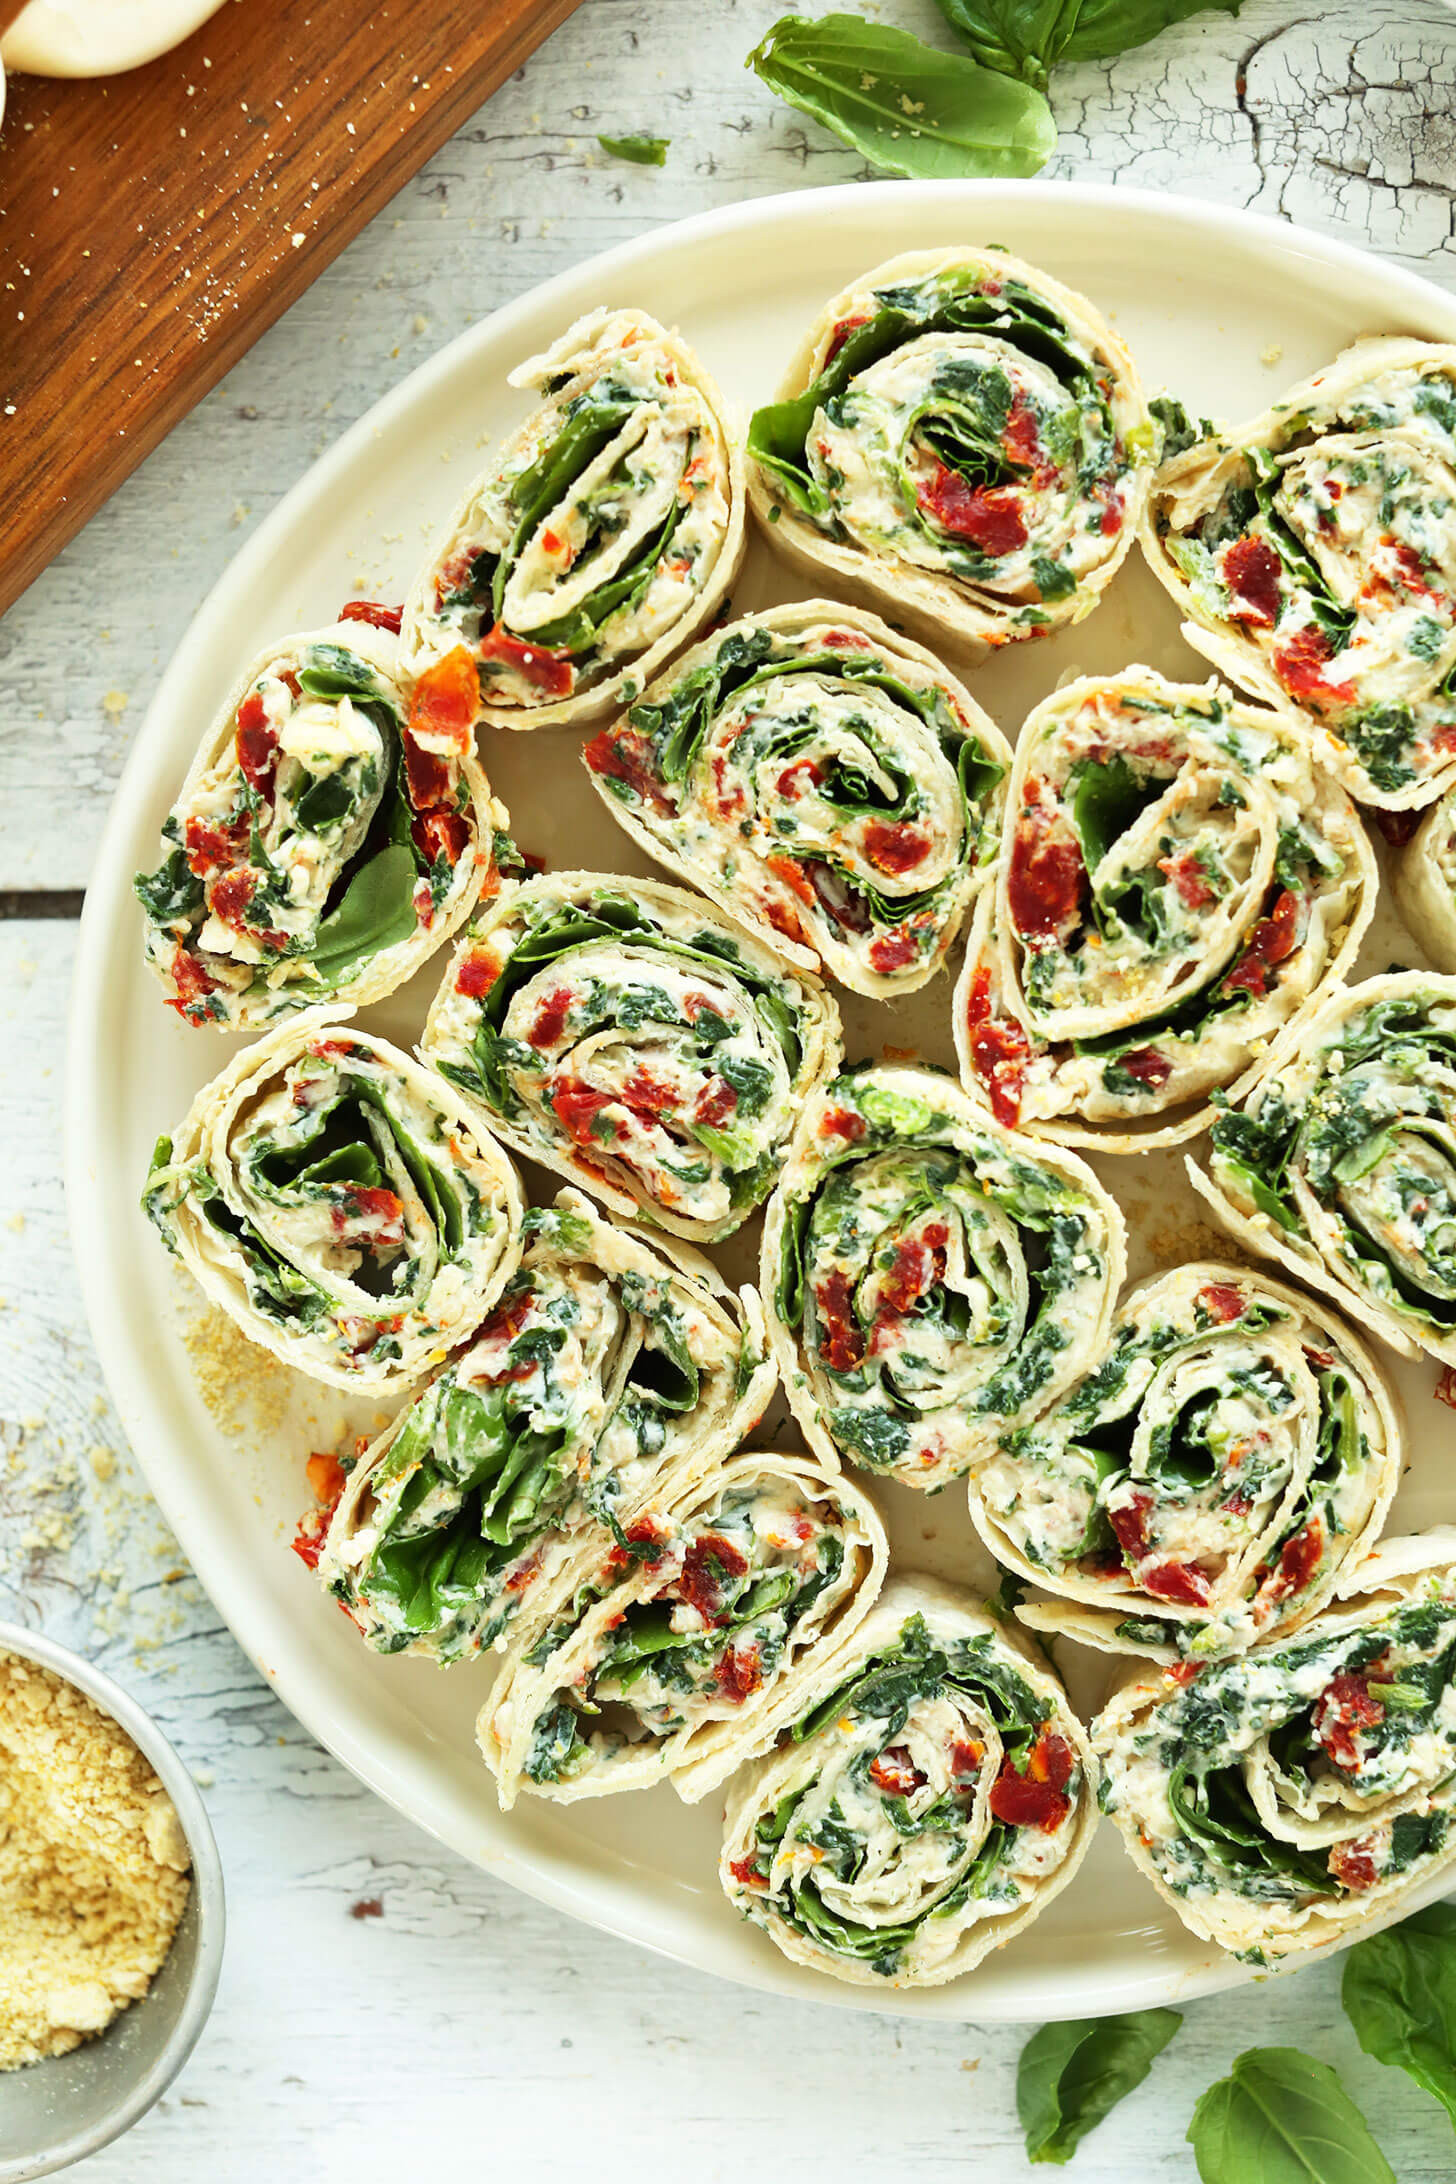 Vegetarian Pinwheel Recipes Best Of 18 Super Tasty Pinwheel Appetizers Easy and Healthy Recipes